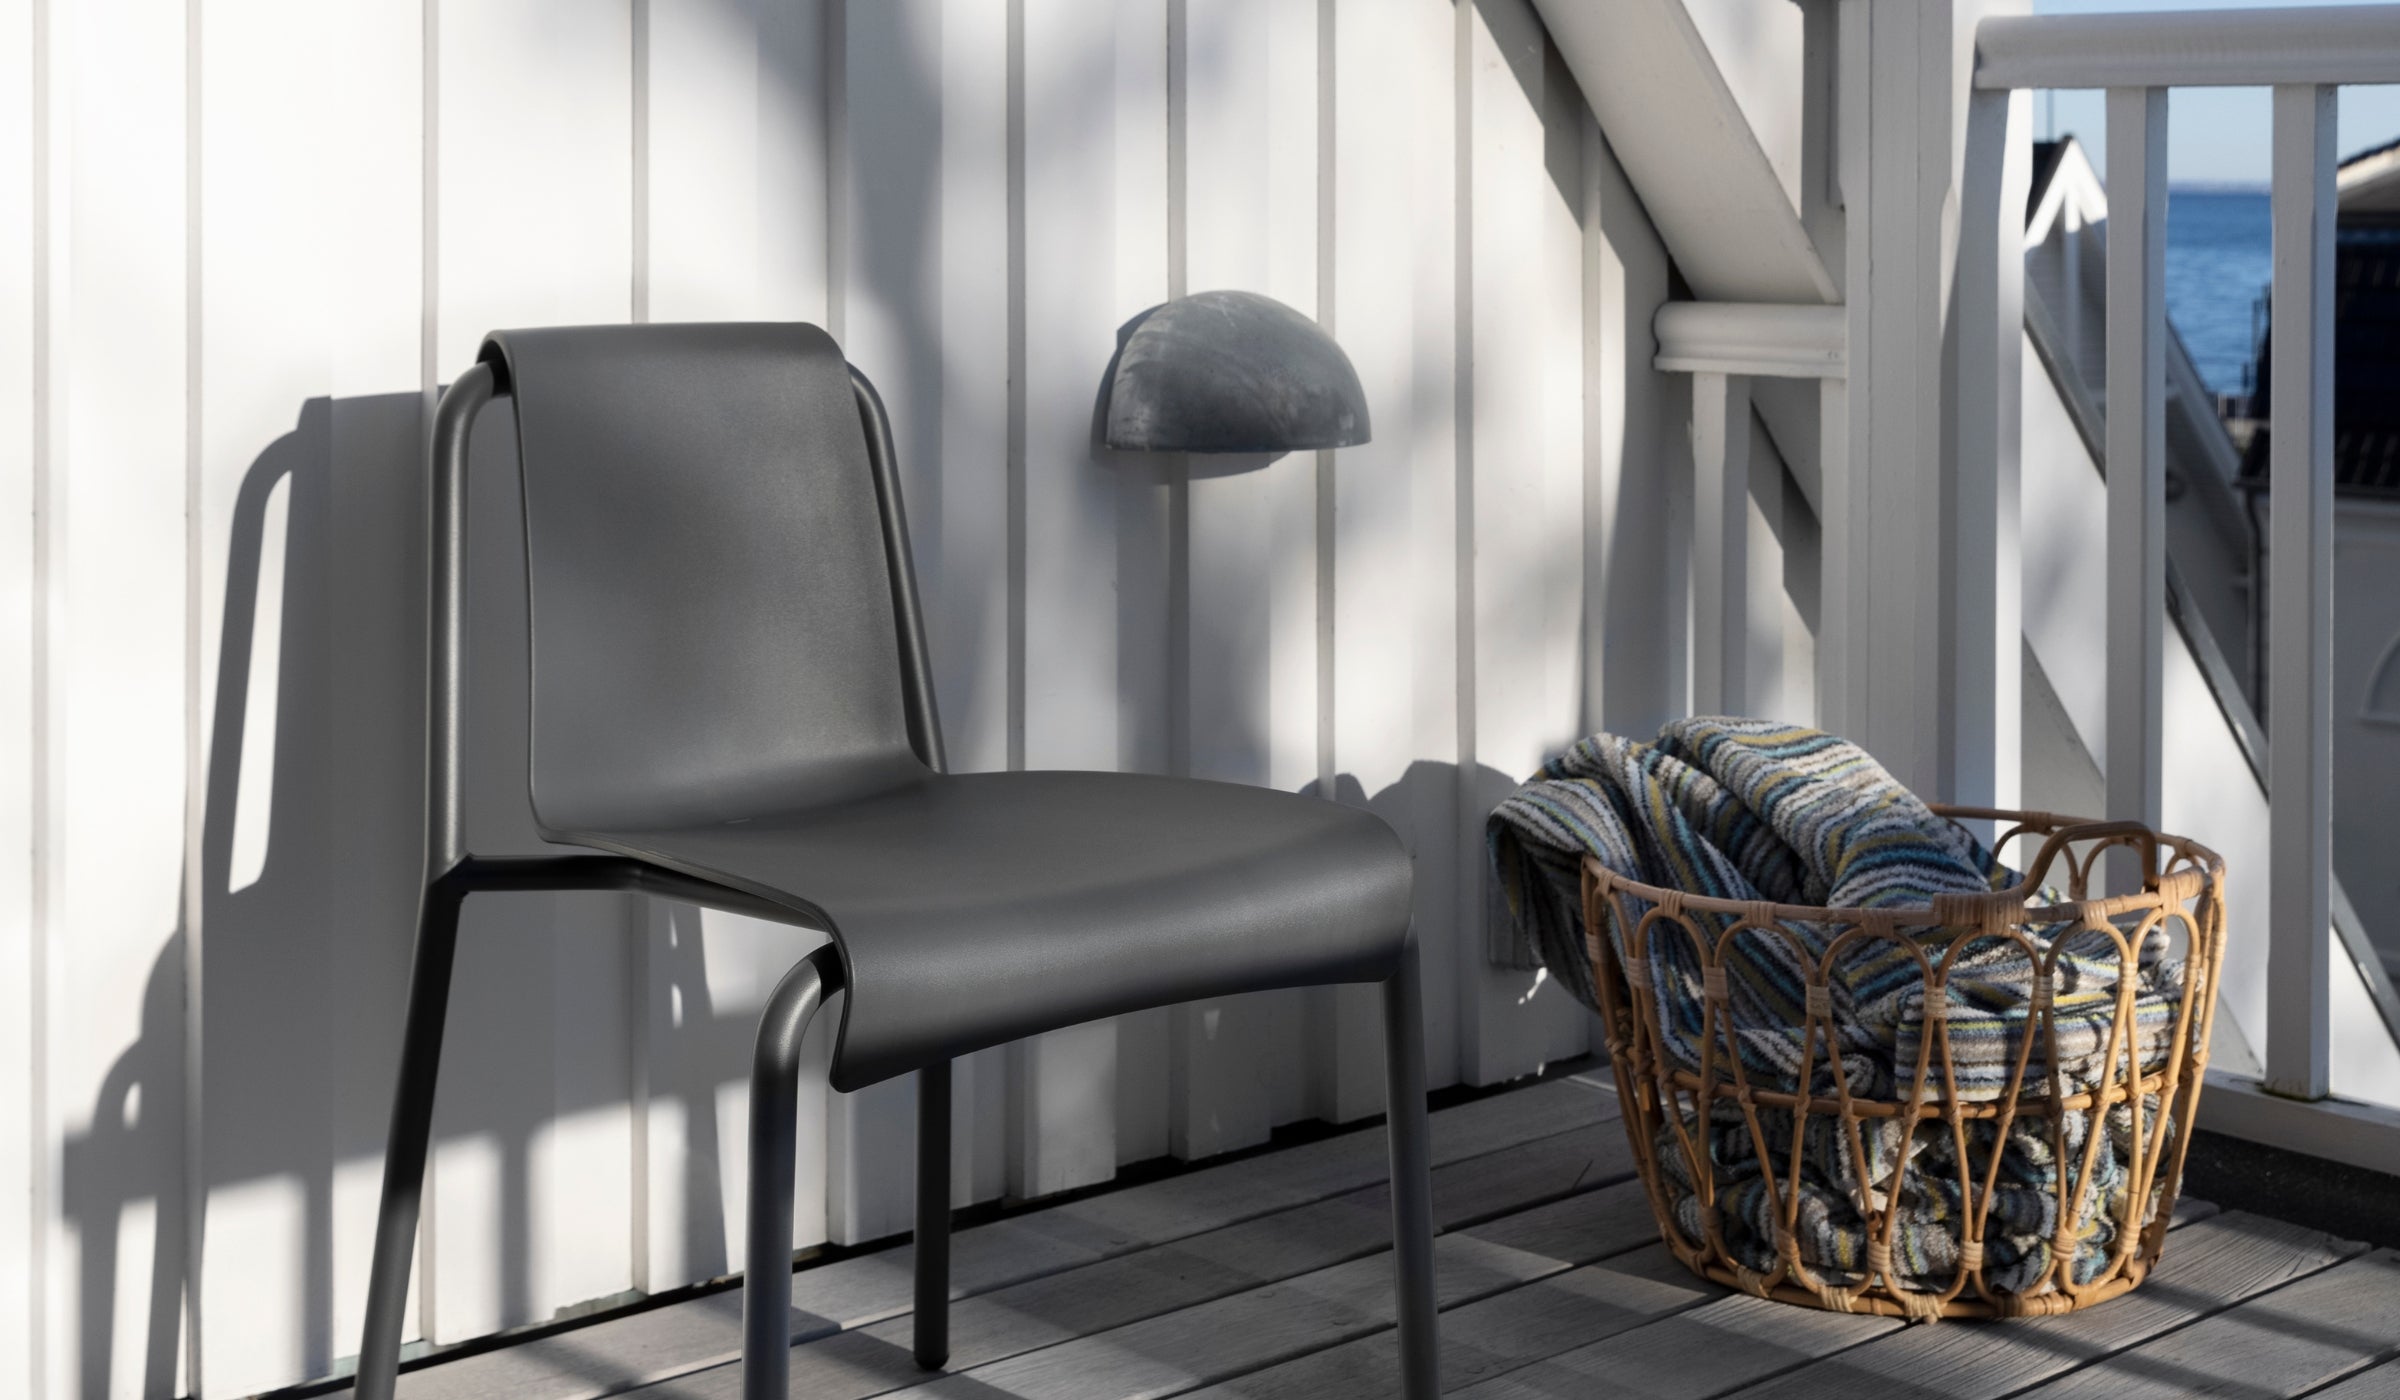 Nami - Designer outdoor chair in recycled plastic, dark gray